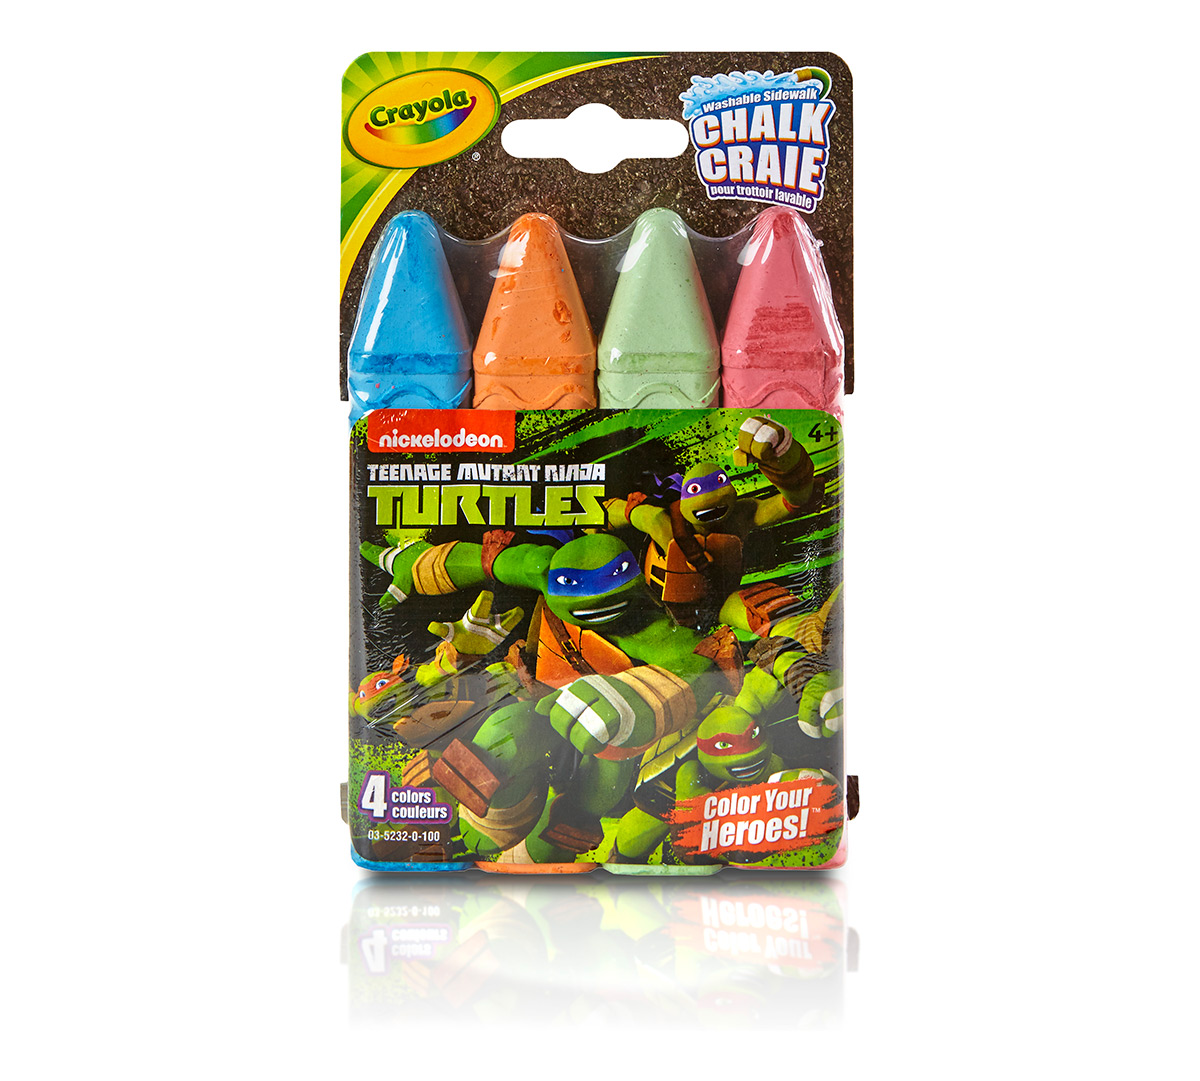 Download Teenage Mutant Ninja Turtles Washable Sidewalk Chalk, 4 count - Color Your Heroes! | Crayola